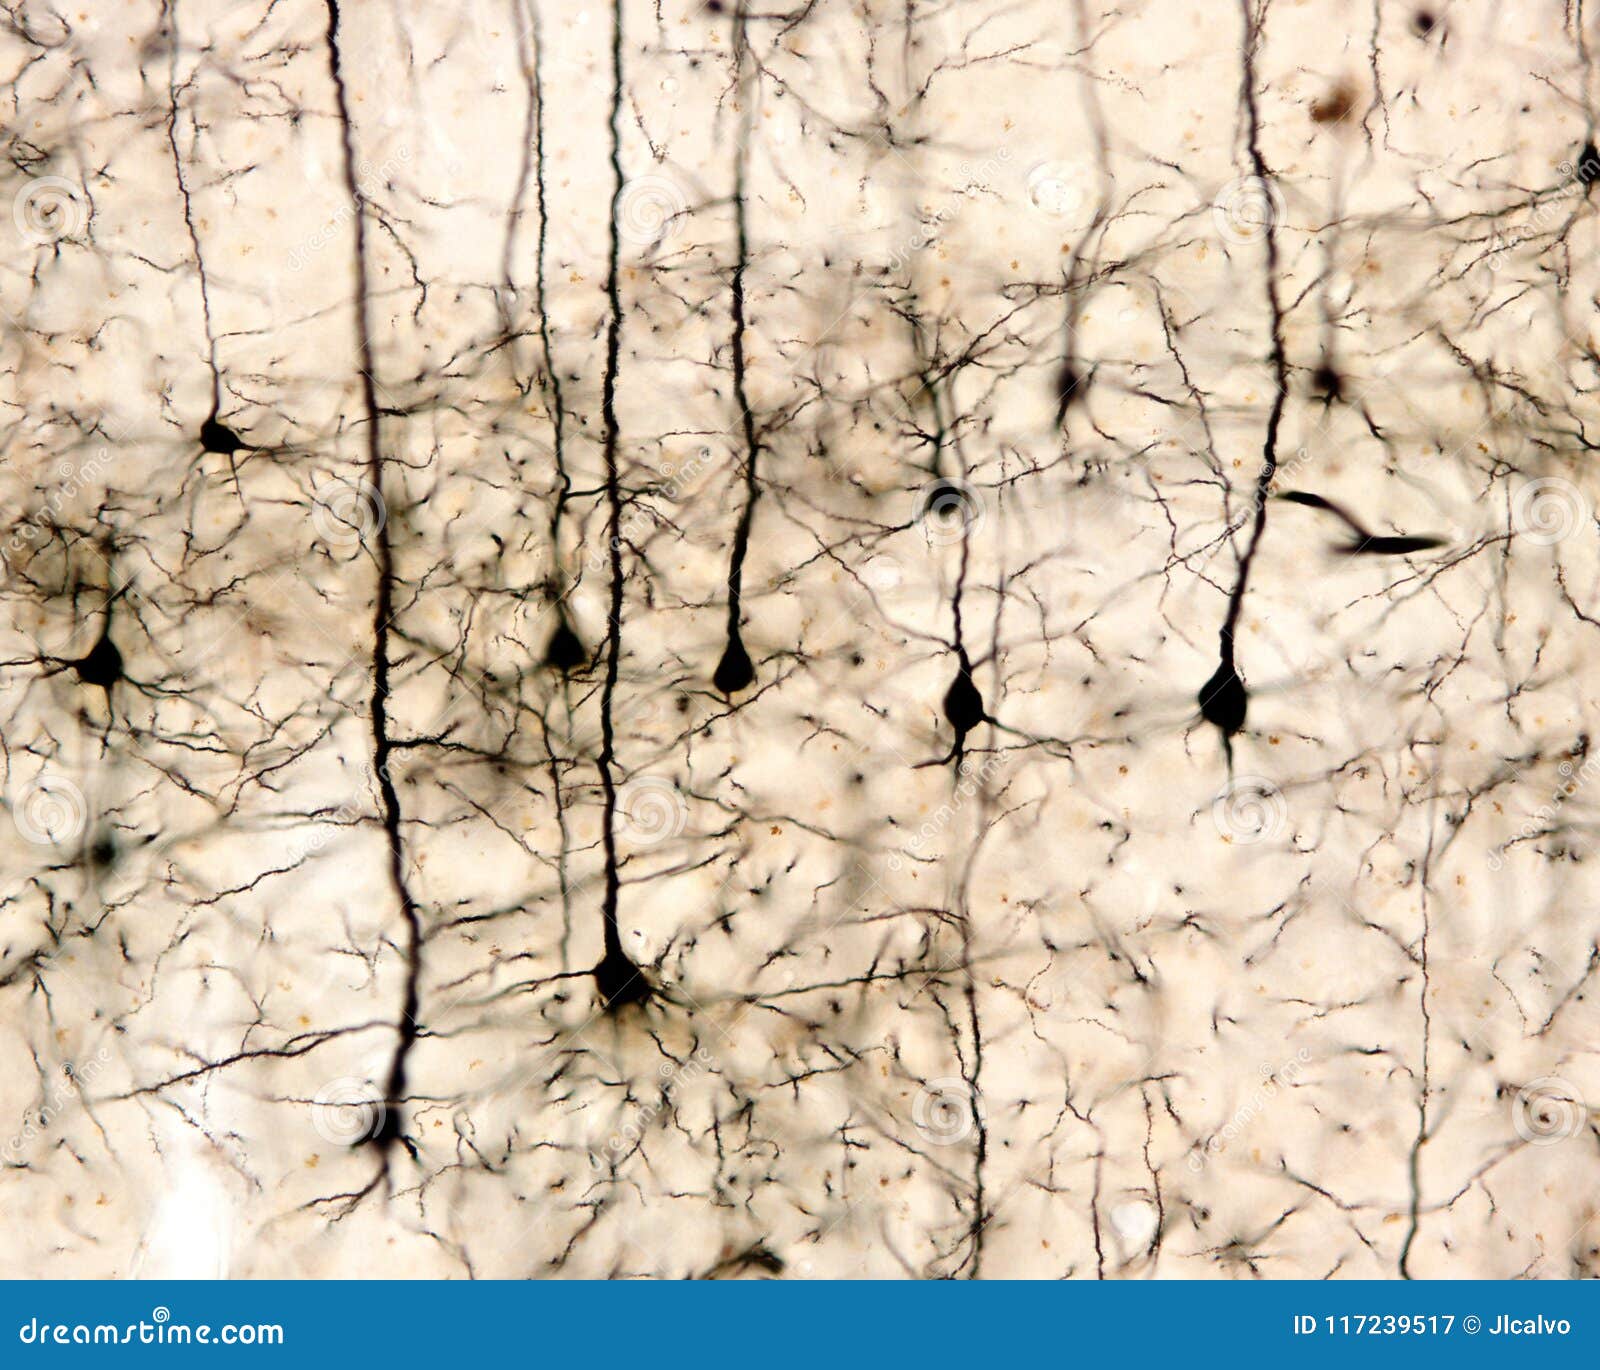 pyramidal neurons. cerebral cortex